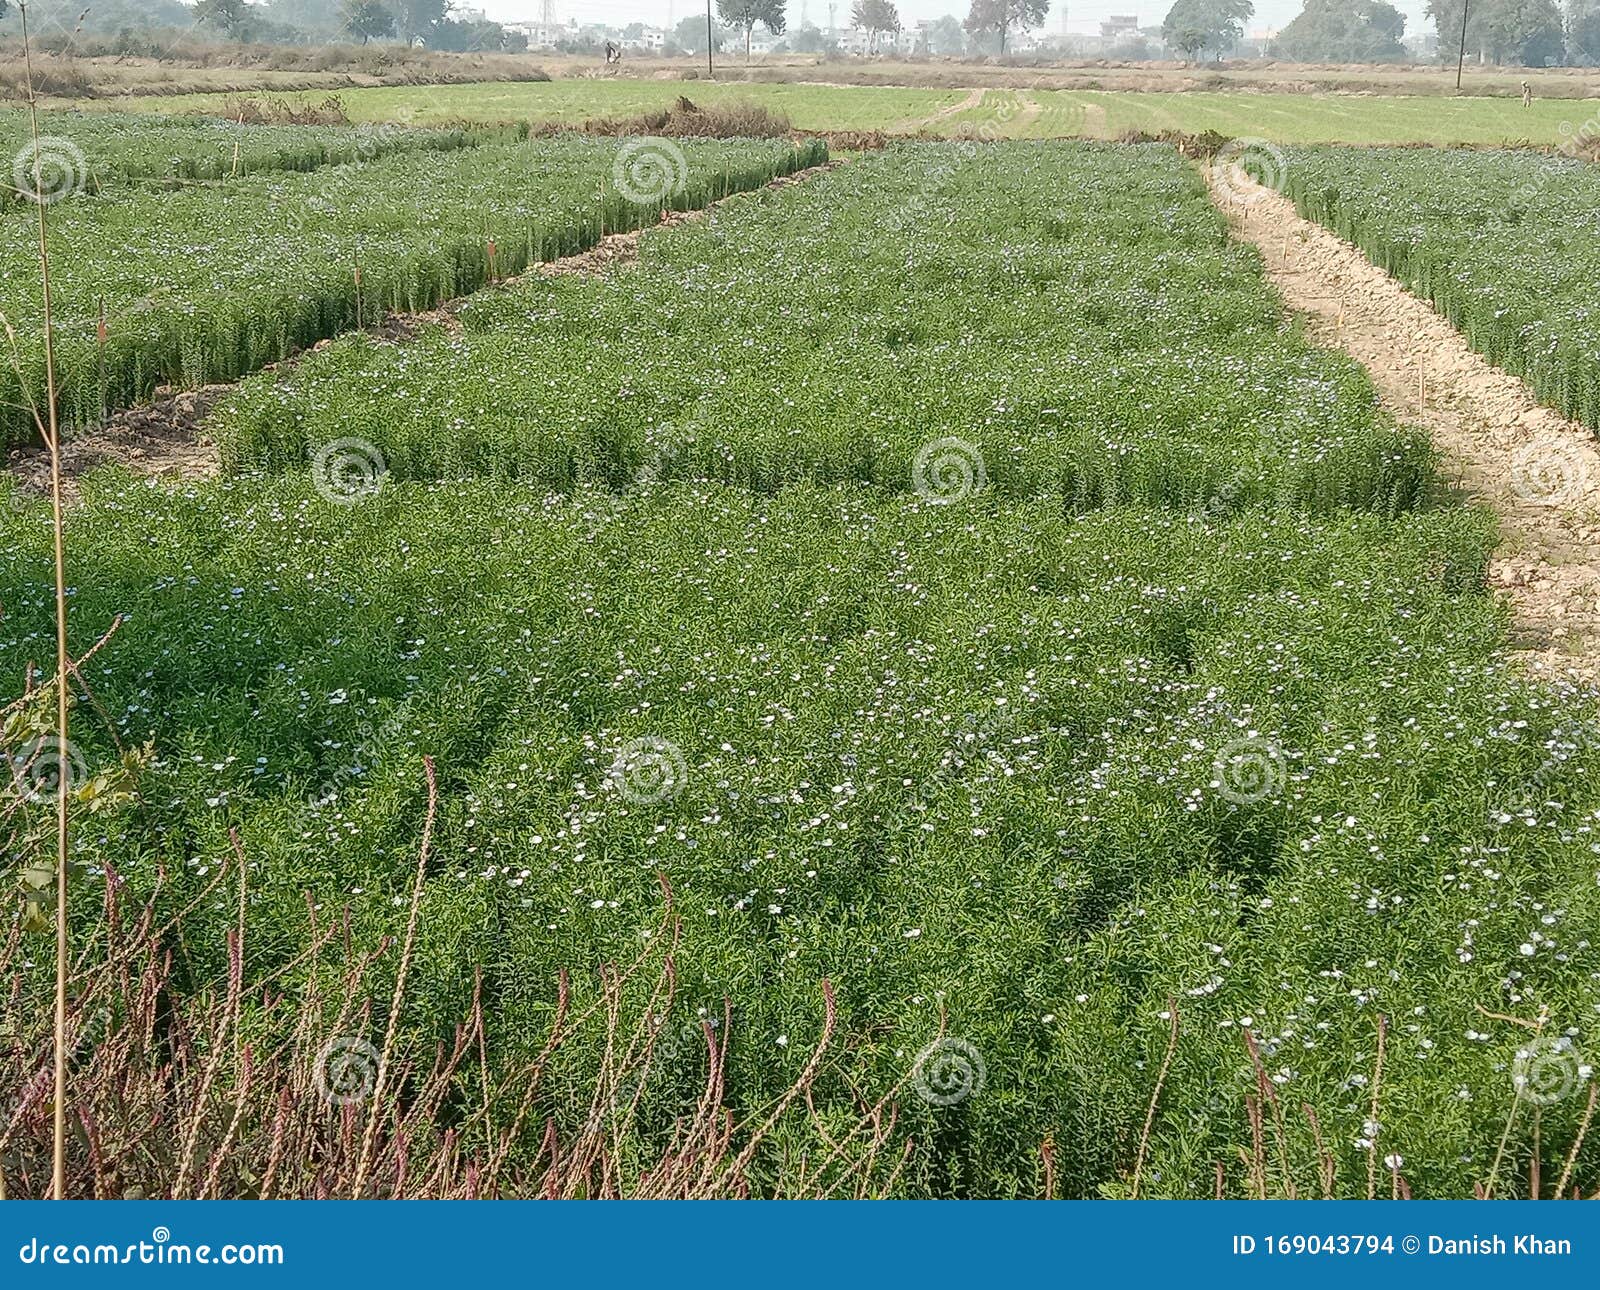 alsi crop growing in field in india